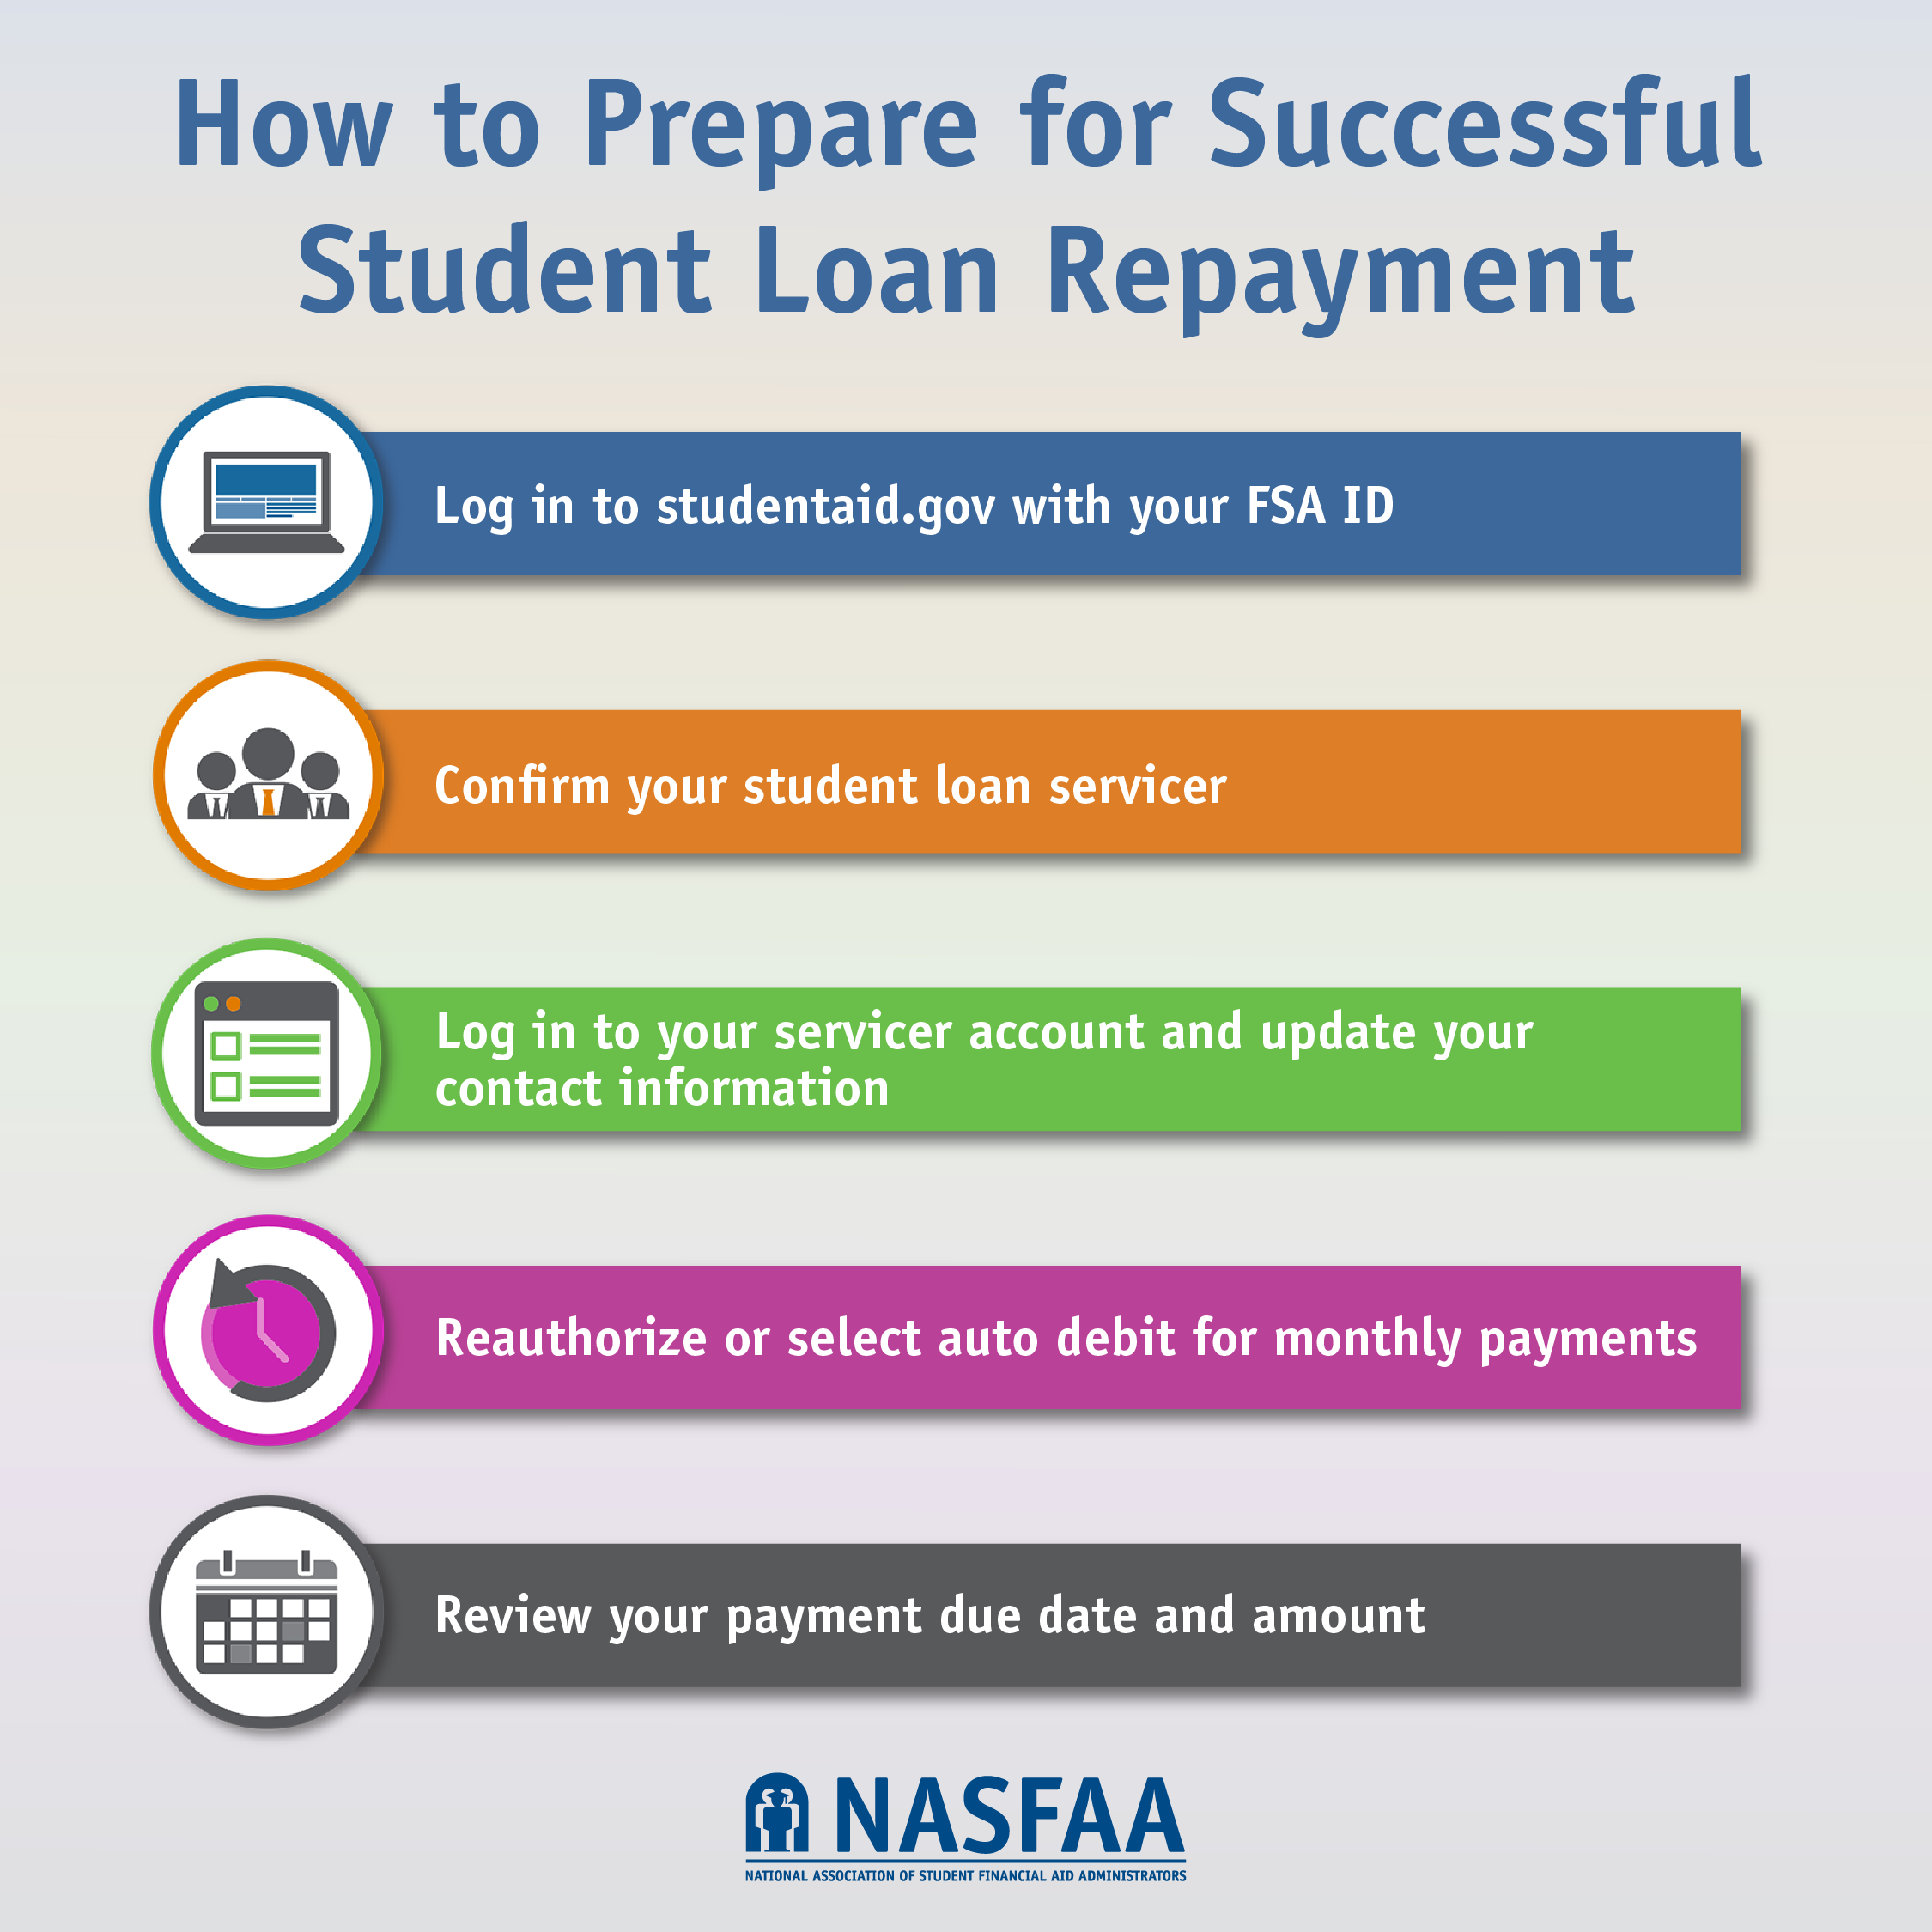 Rapid loan repayment